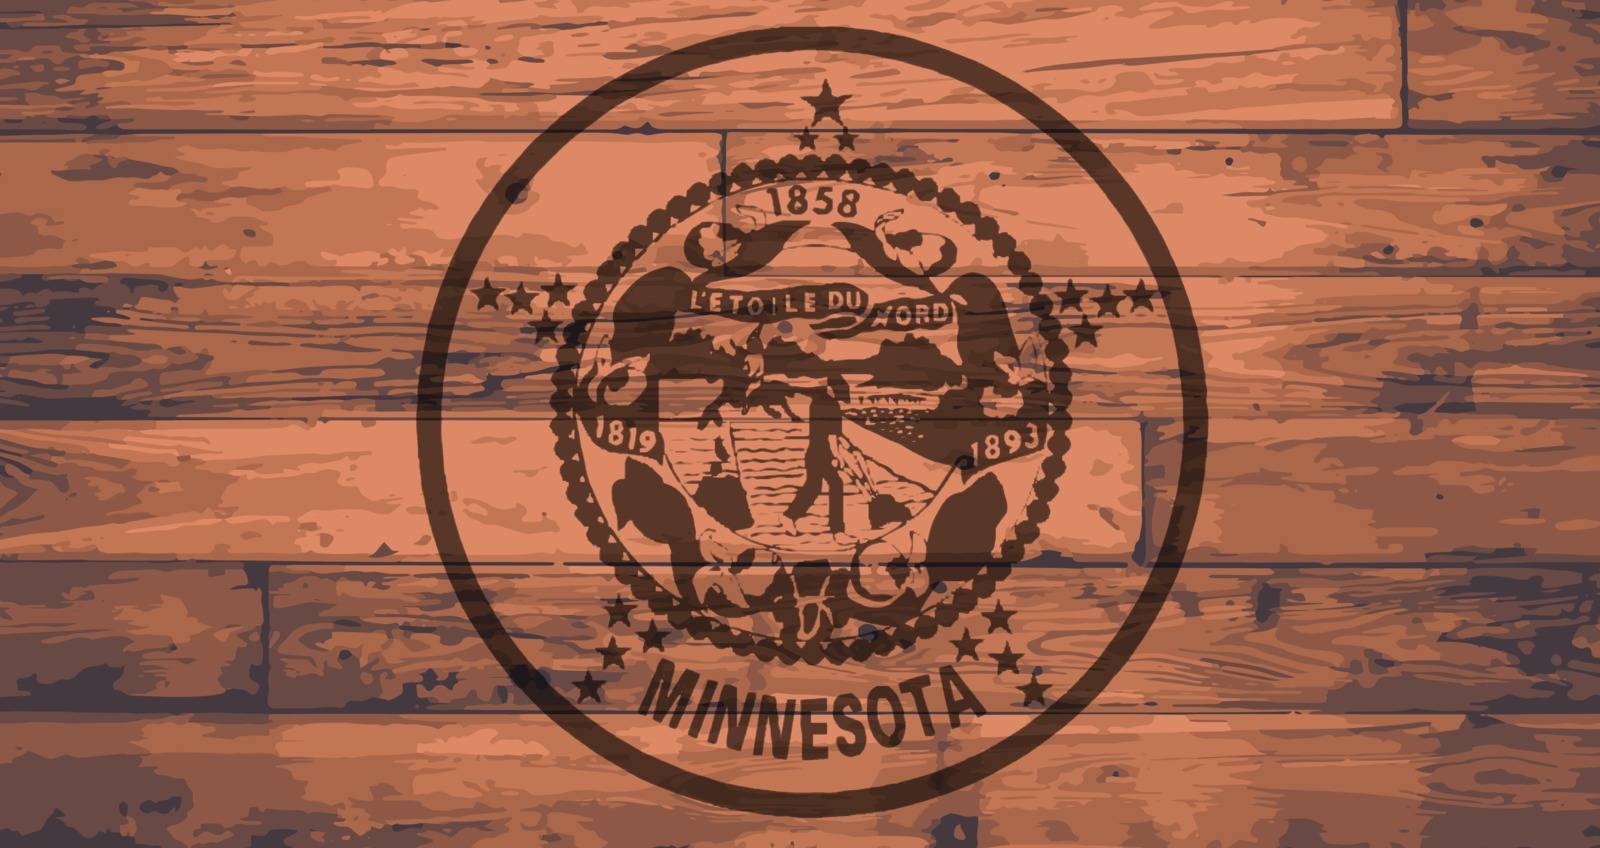 Minnesota State Flag branded onto wooden planks